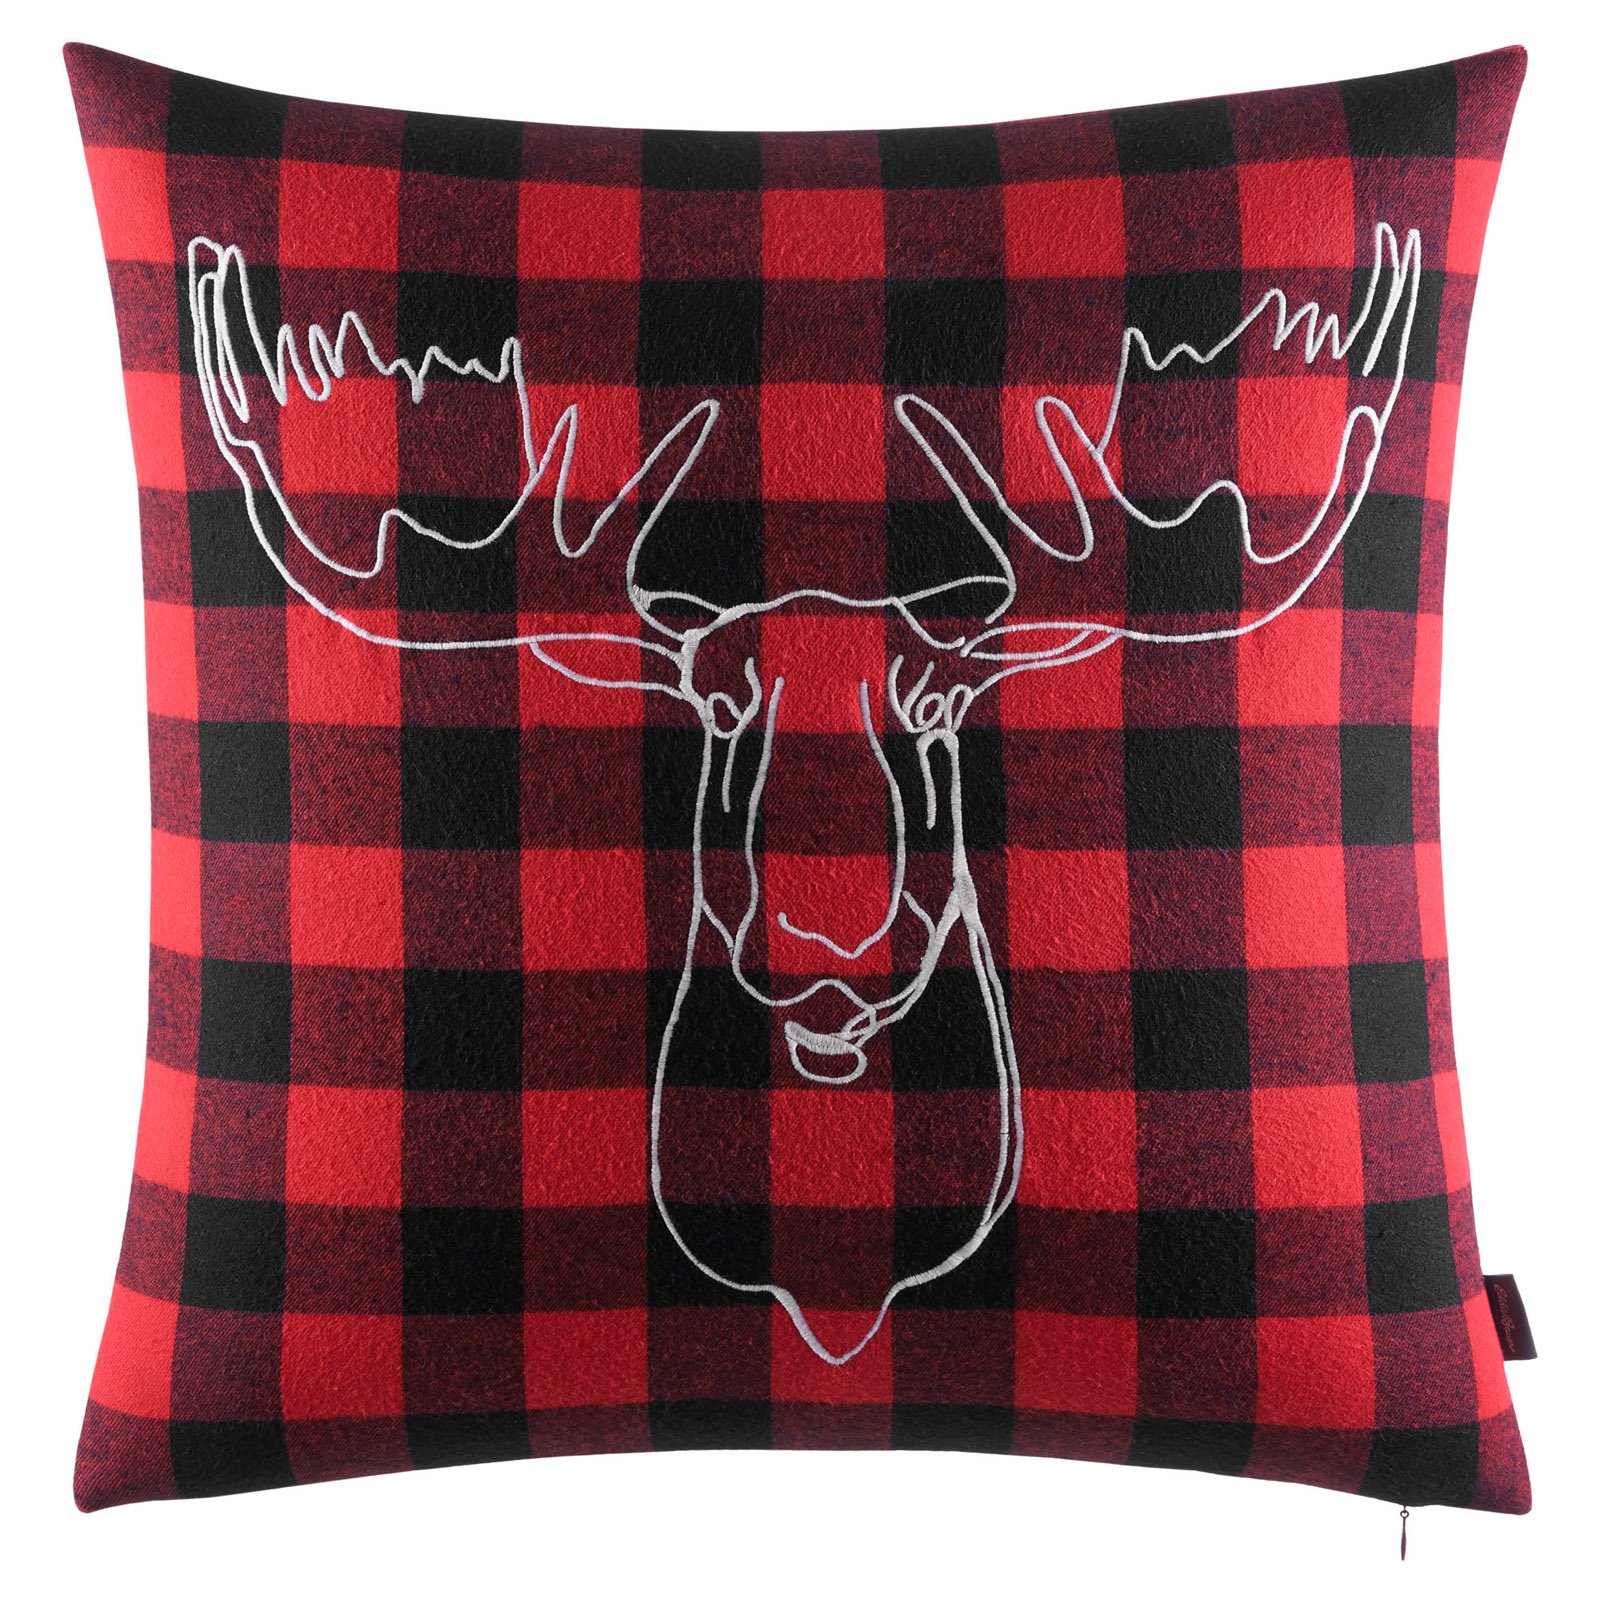 Eddie Bauer Moose Head Square Throw Pillow - image 1 of 2